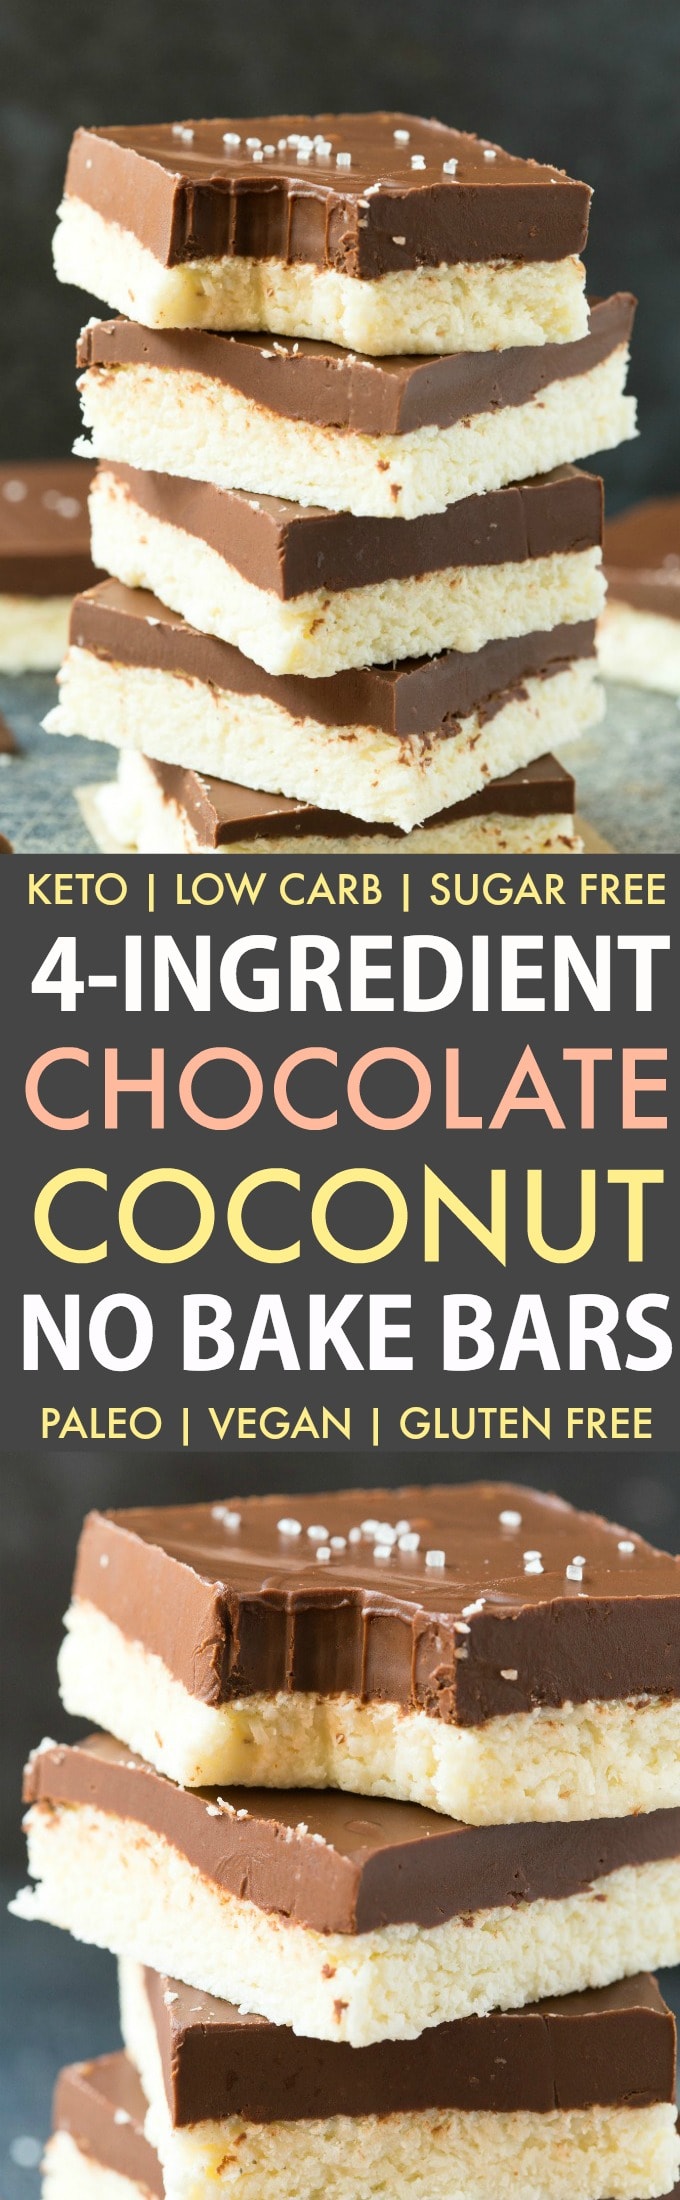 Healthy 4-Ingredient Paleo Vegan Chocolate Coconut Bars 